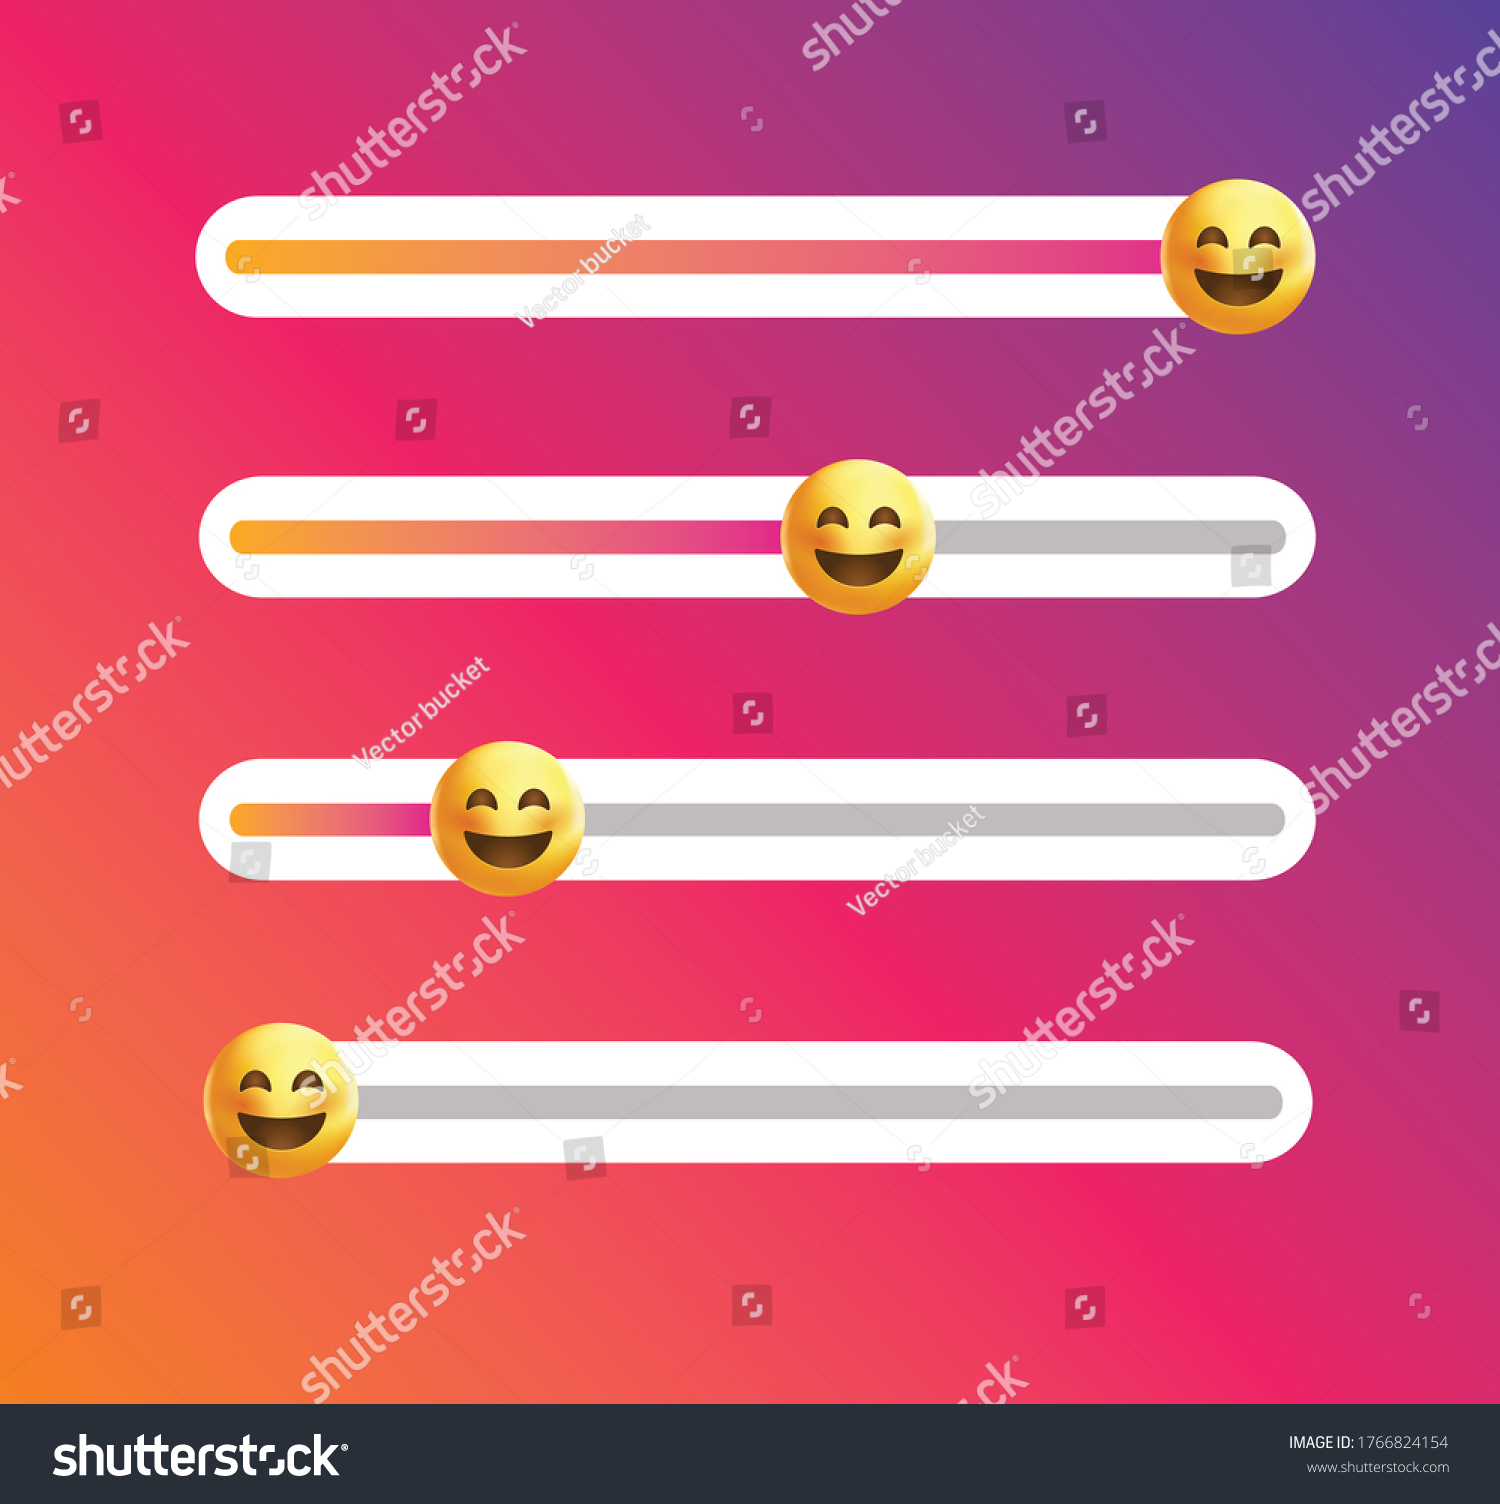 SVG of Insta emoji slider. Yellow face icon. Happy emoticon. love emoji. Emoticon level slider. Feedback  poll. Vector feedback survey template.  svg